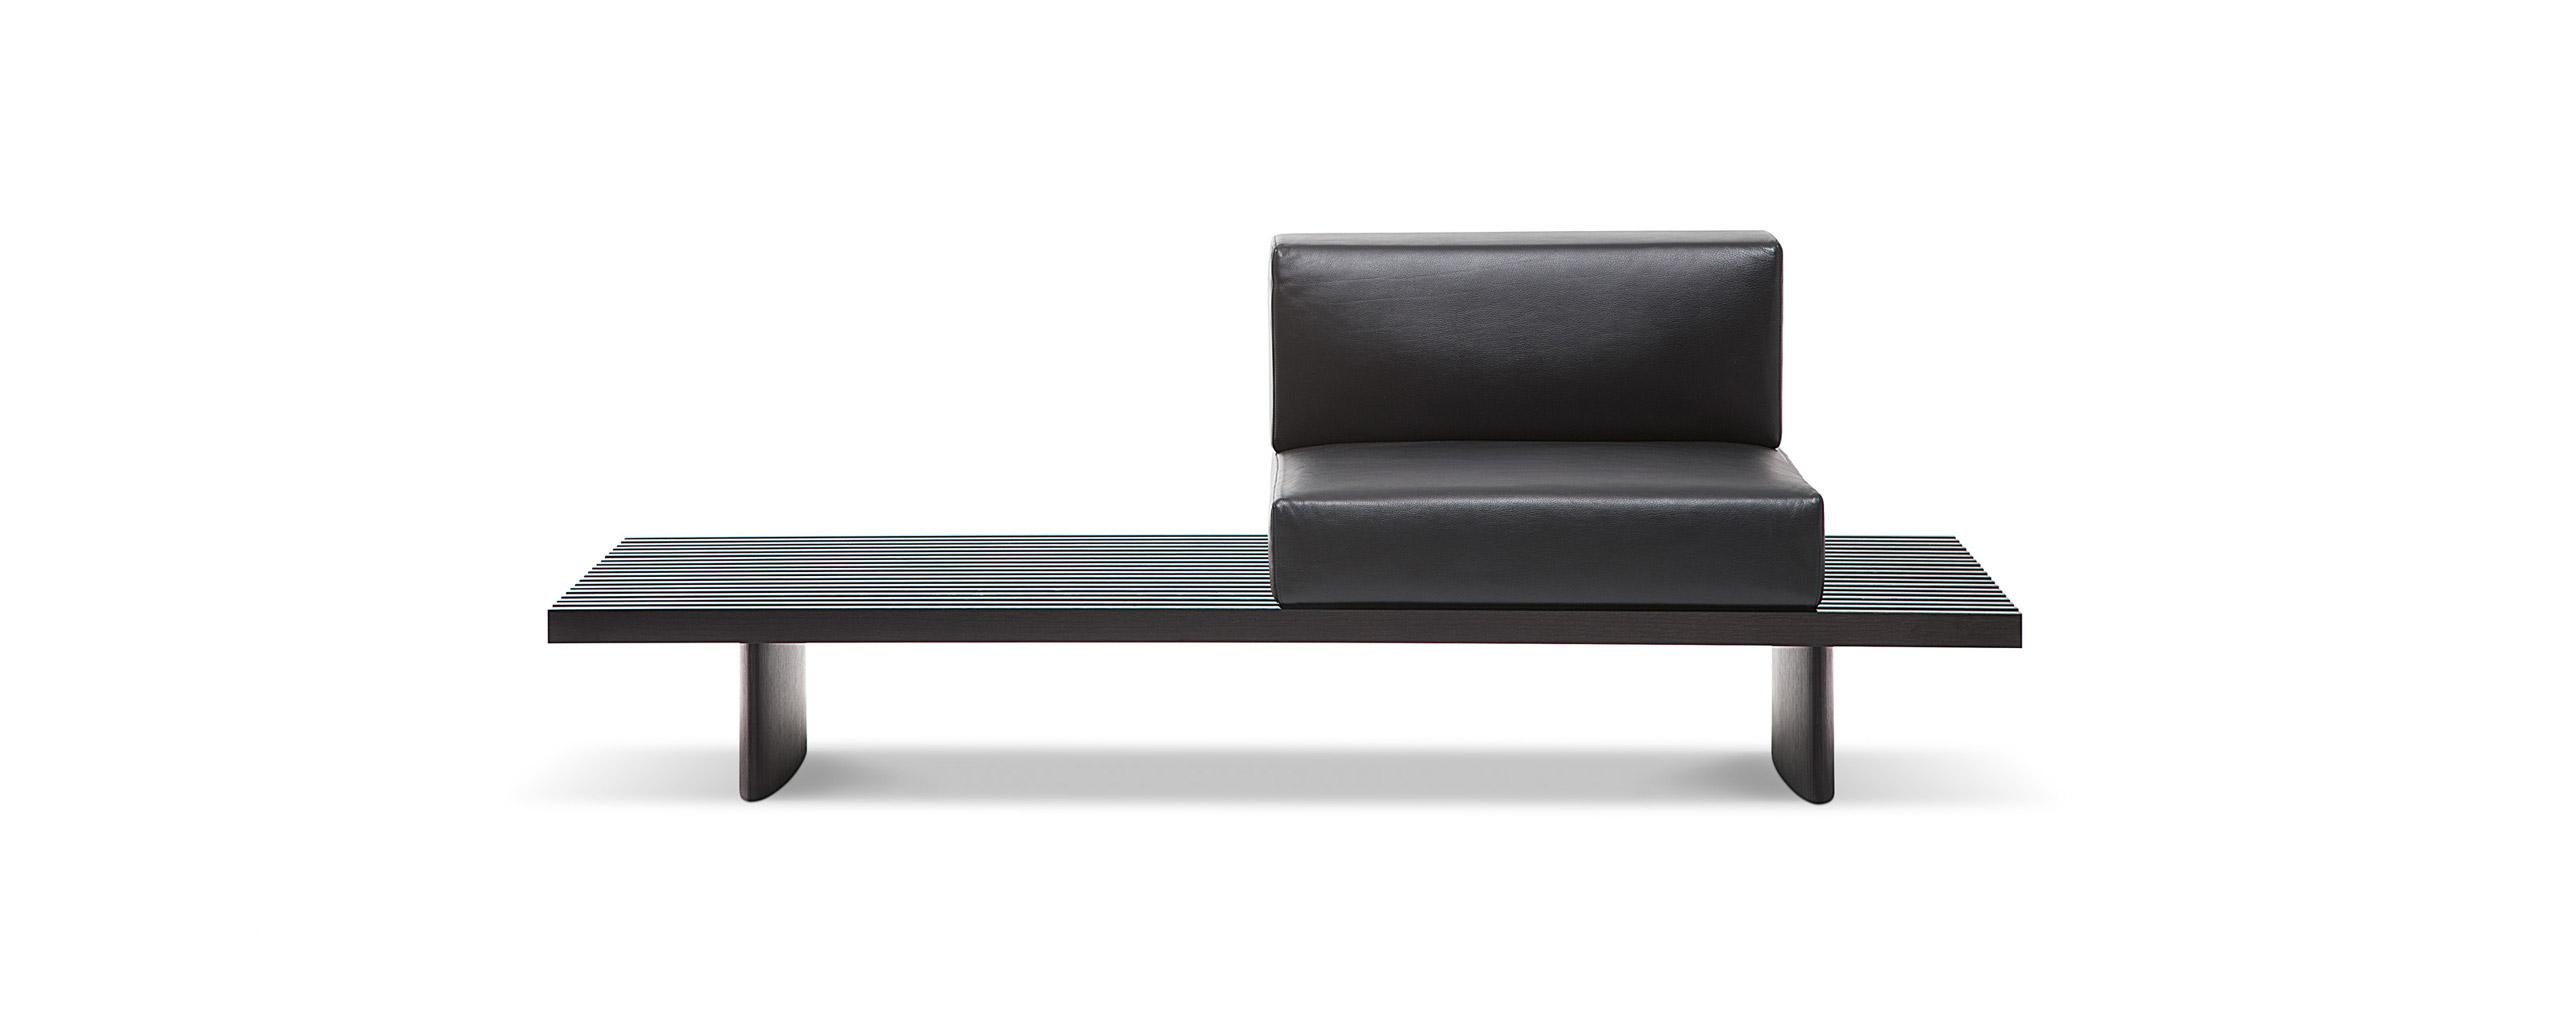 Italian Charlotte Perriand Refolo Modular Sofa, Wood and Black Leather by Cassina